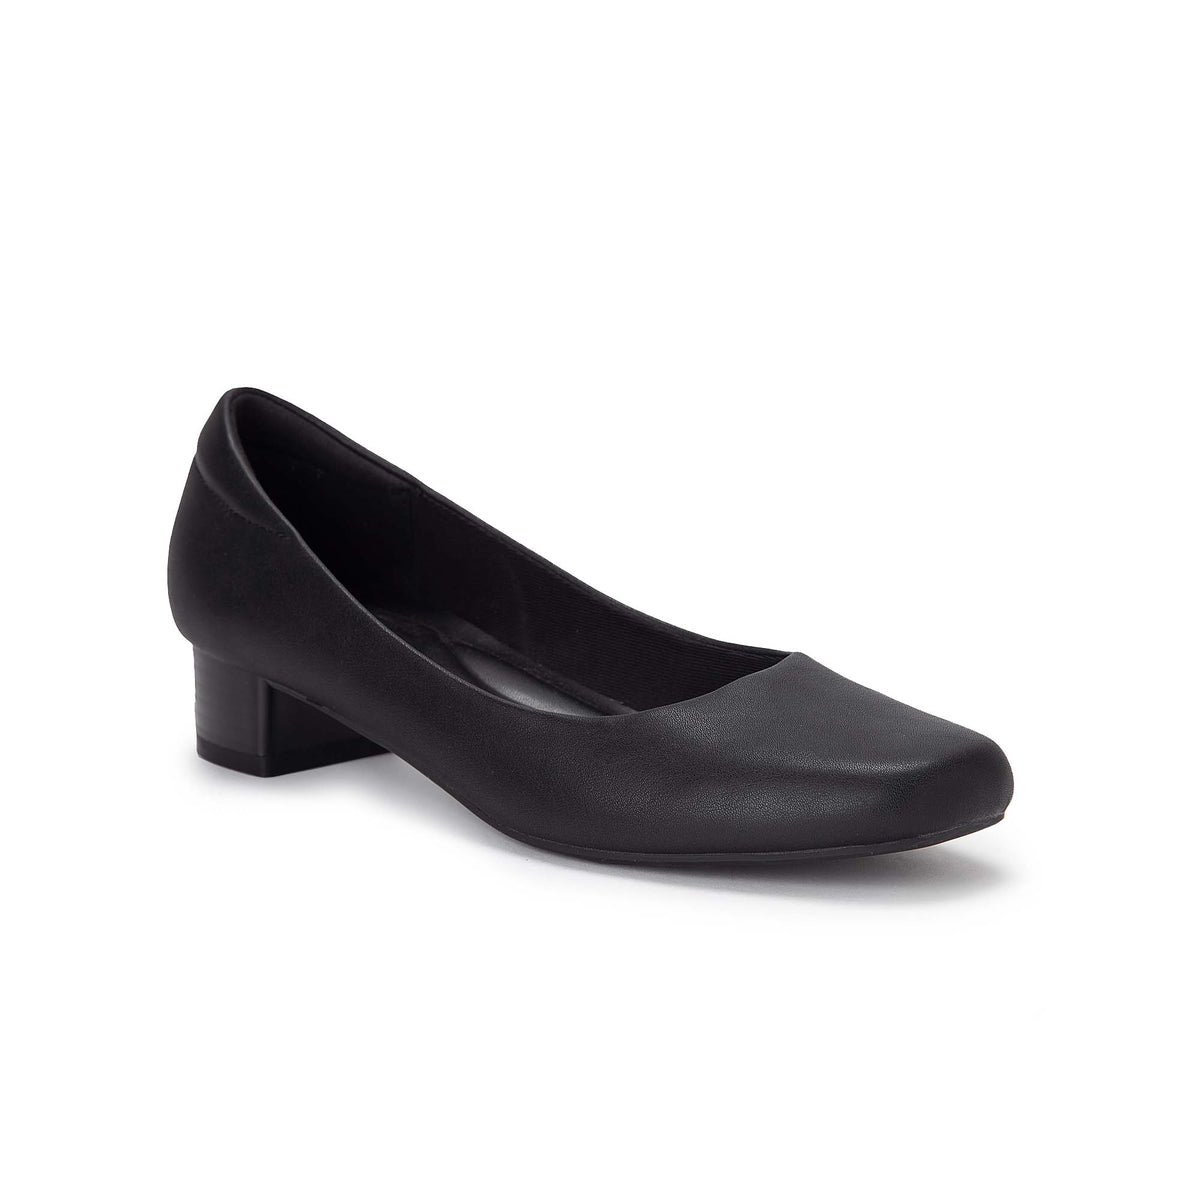 Leather heels BATA Burgundy size 39 EU in Leather - 36101824